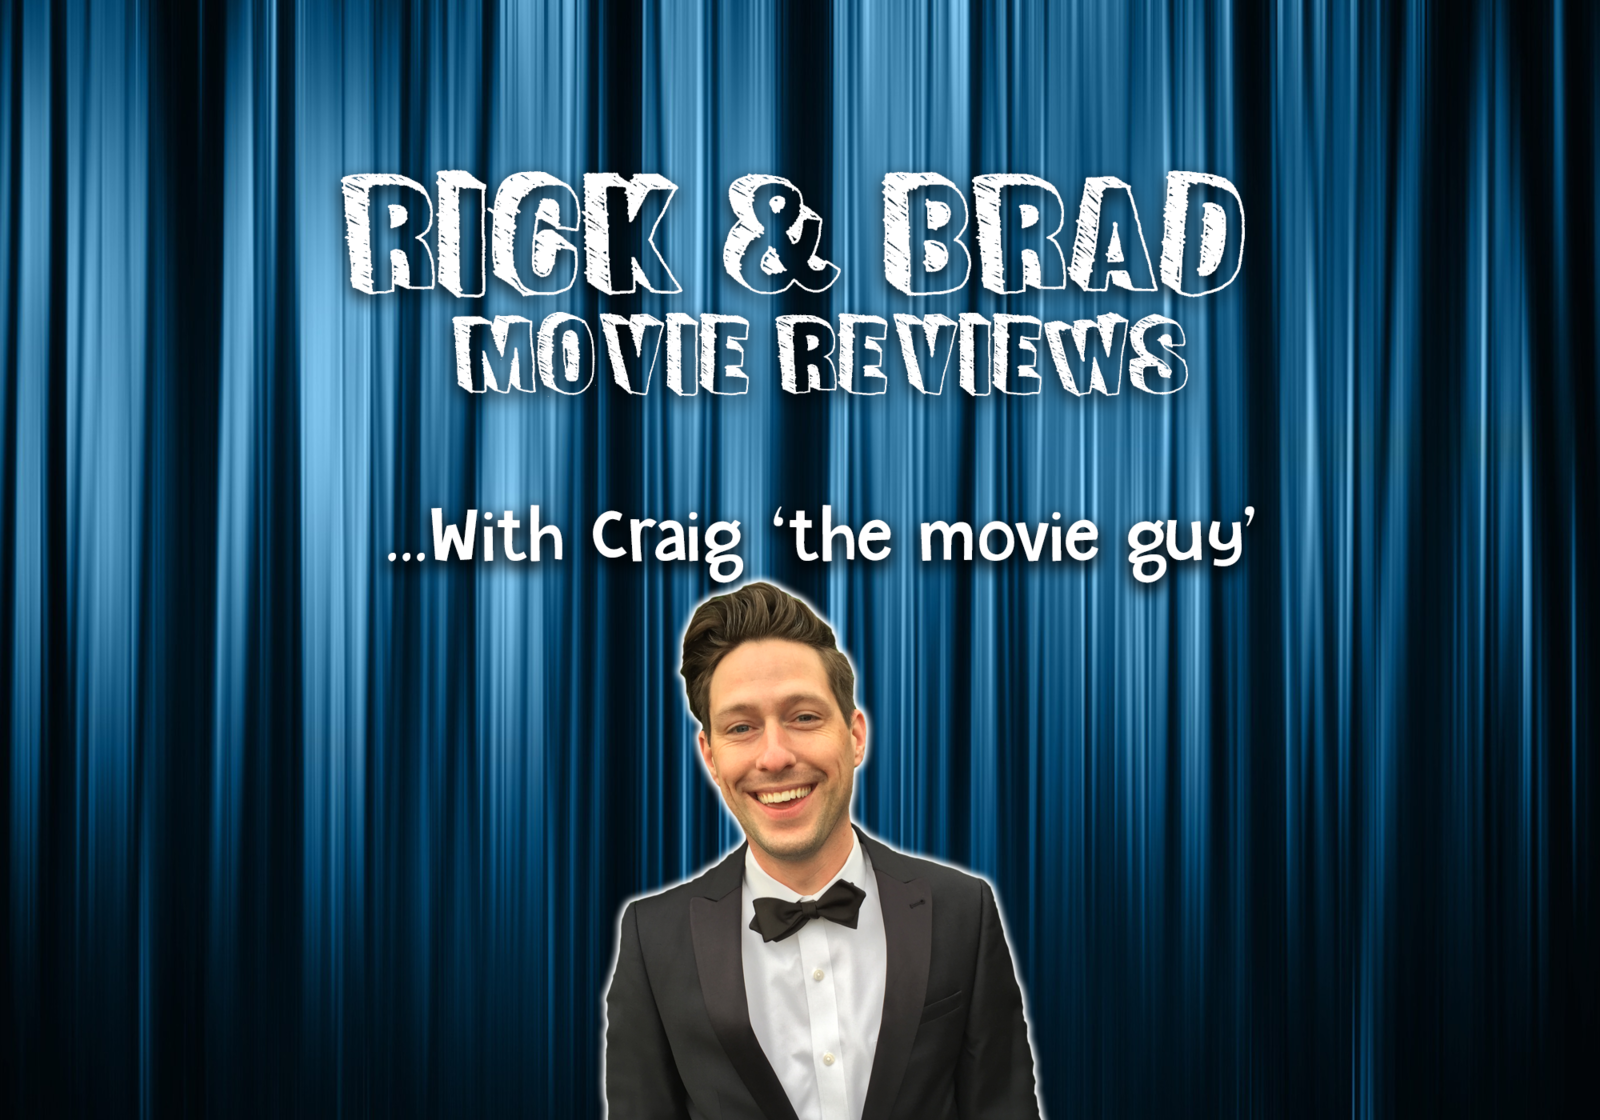 06-25 Movie Reviews with Craig 'The Movie Guy'